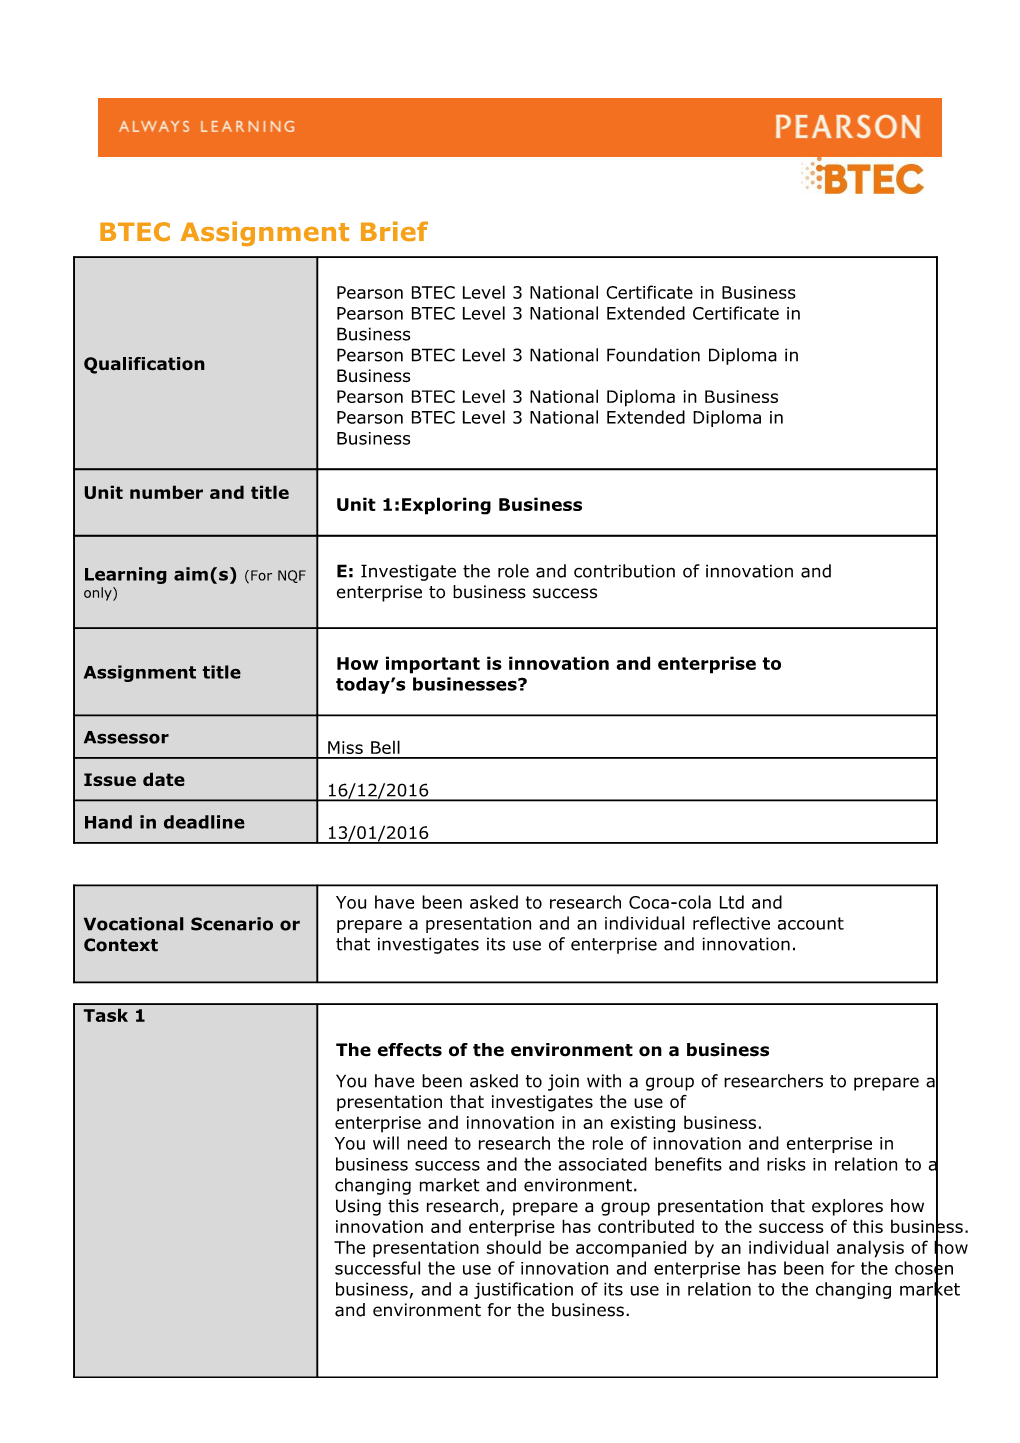 BTEC Assignment Brief